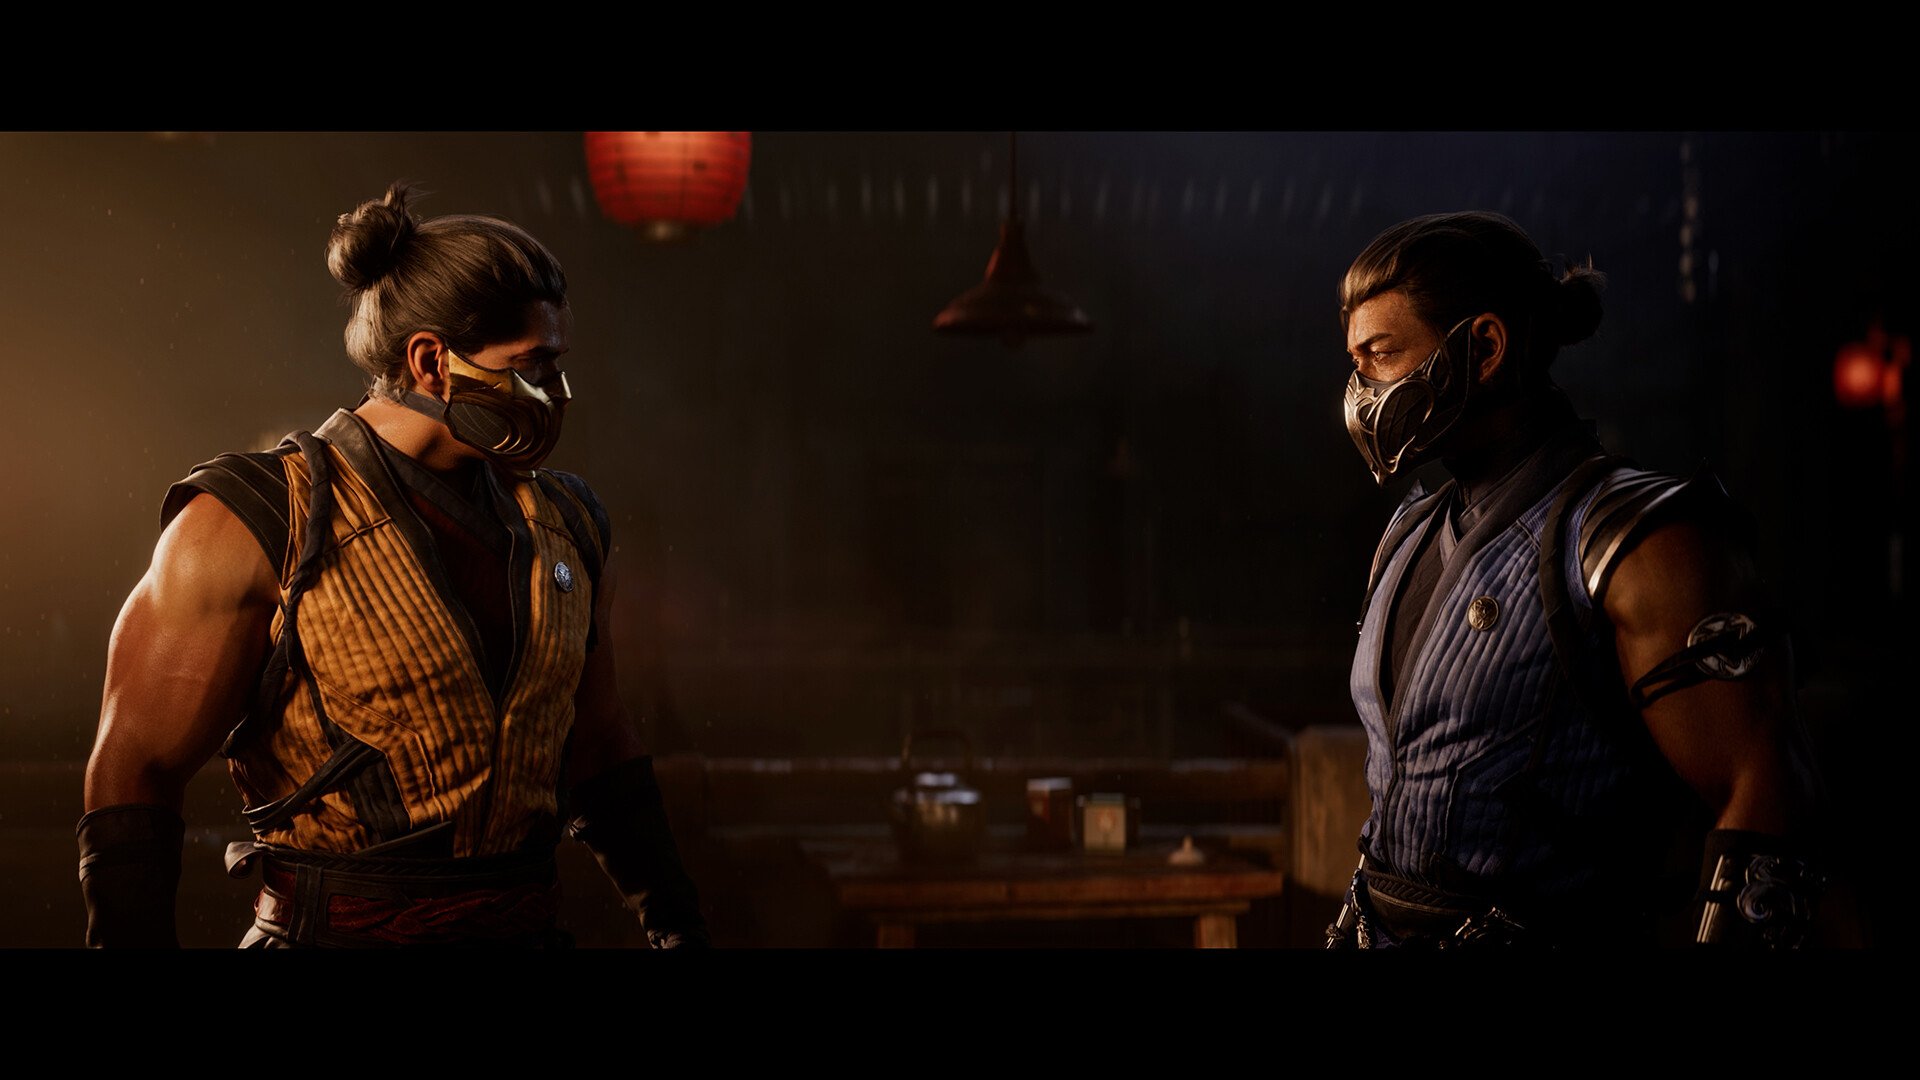 Mortal Kombat 11 On Nintendo Switch And PC Won't Get Cross-Play